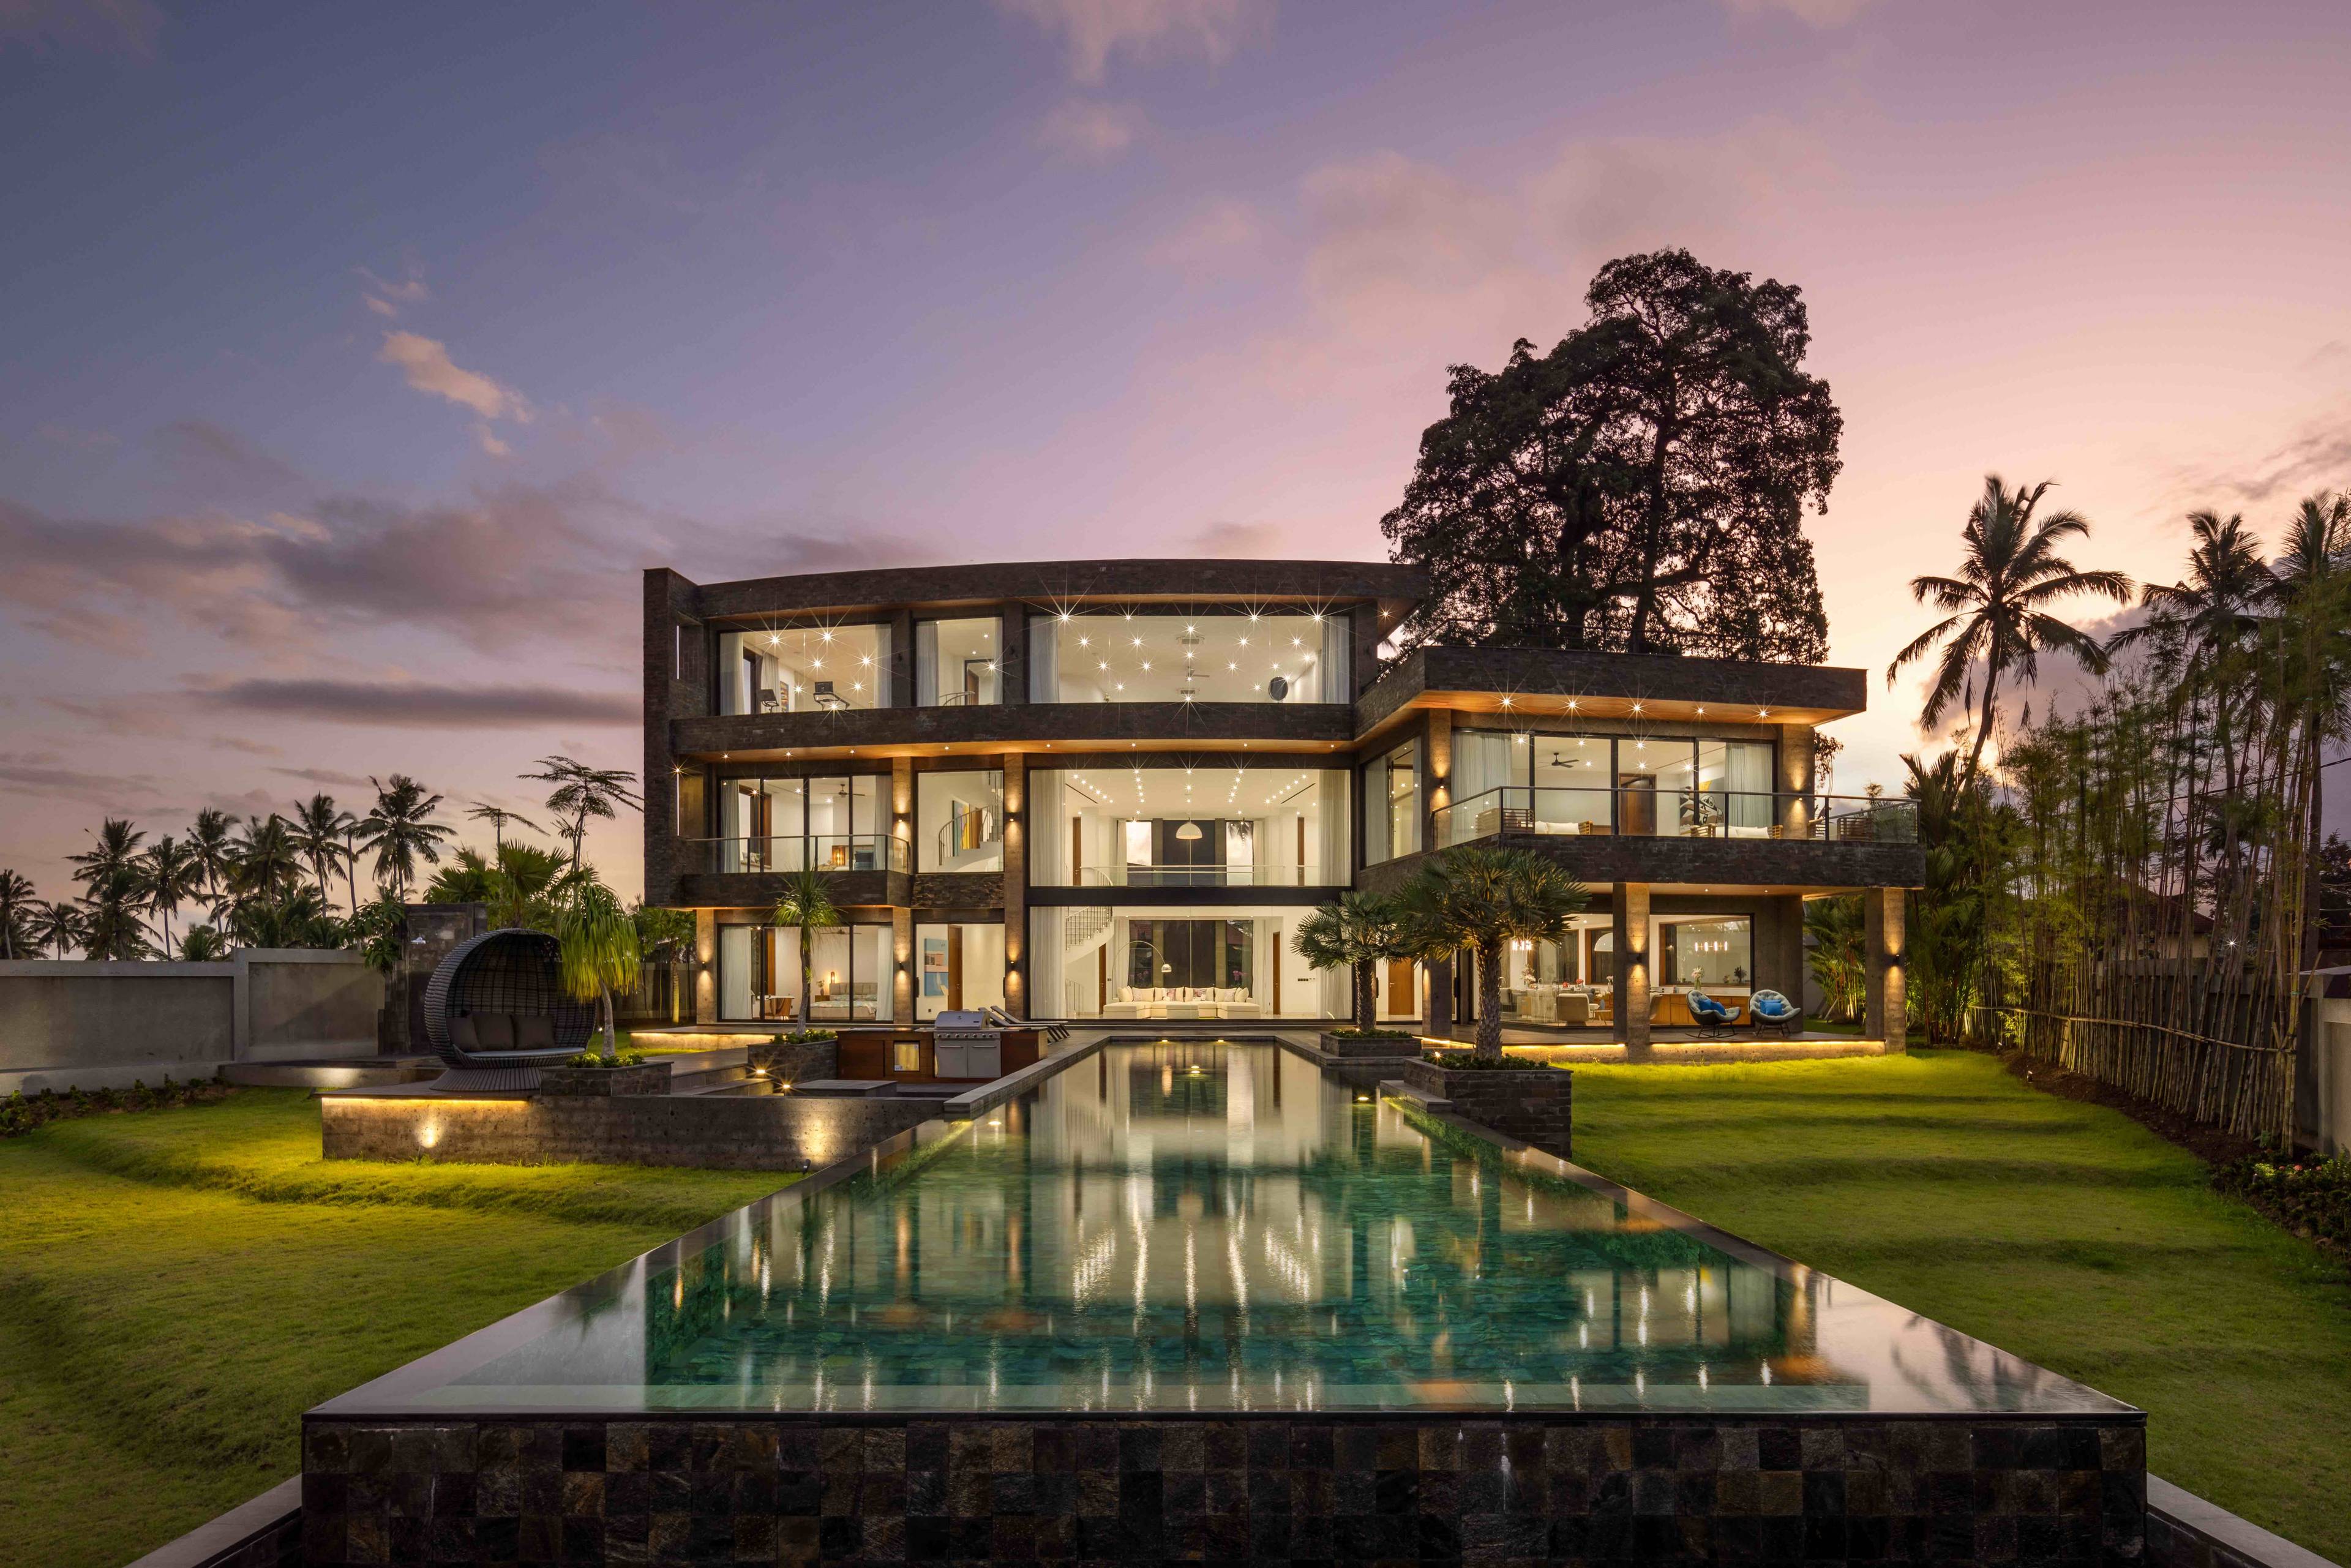 Exquisite 3-story, 5-bedroom villa nestled in the heart of Ubud, Bali